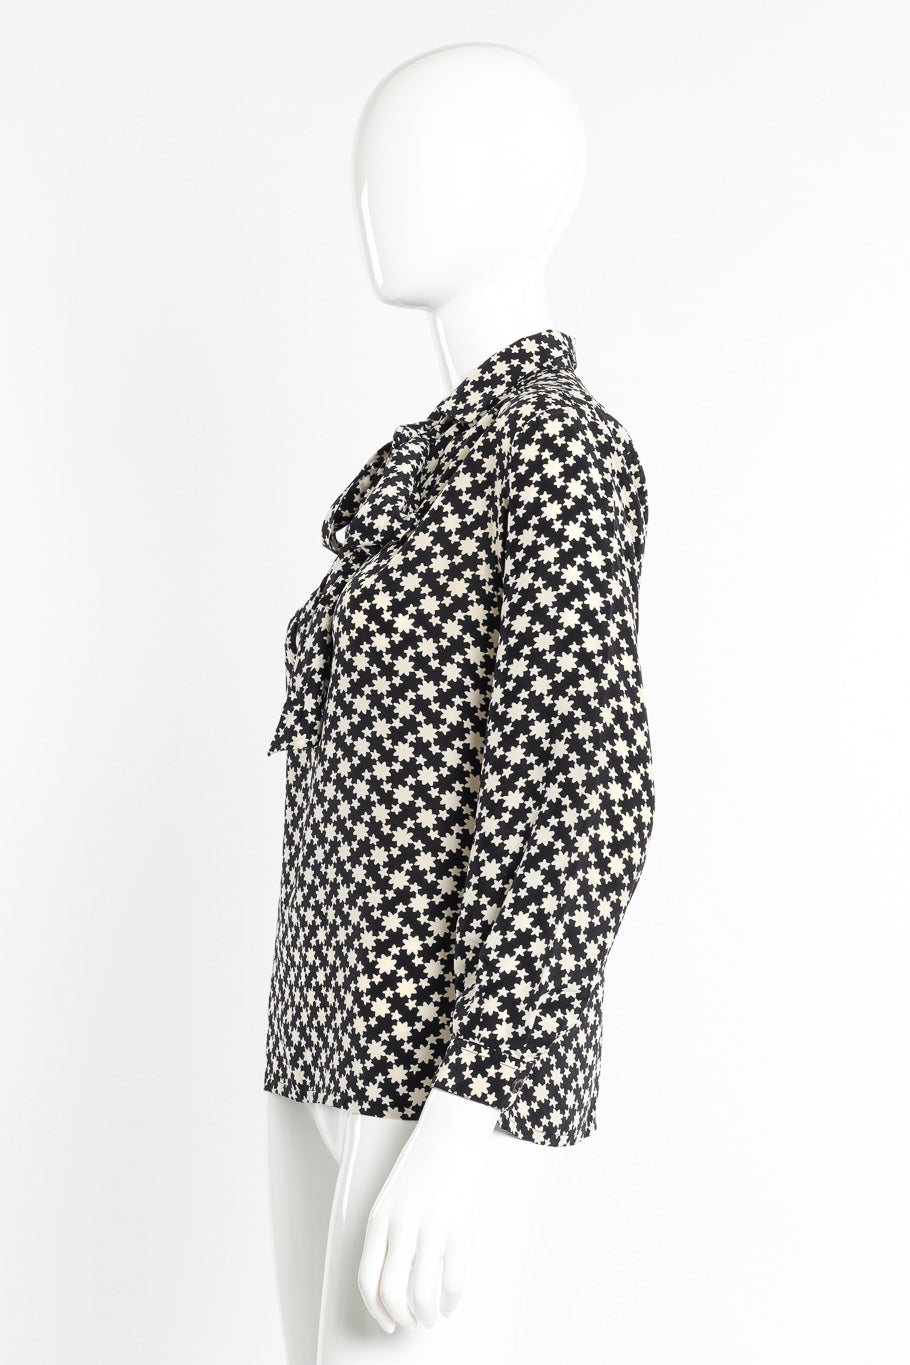 Star print blouse by Yves Saint Laurent on mannequin side @recessla